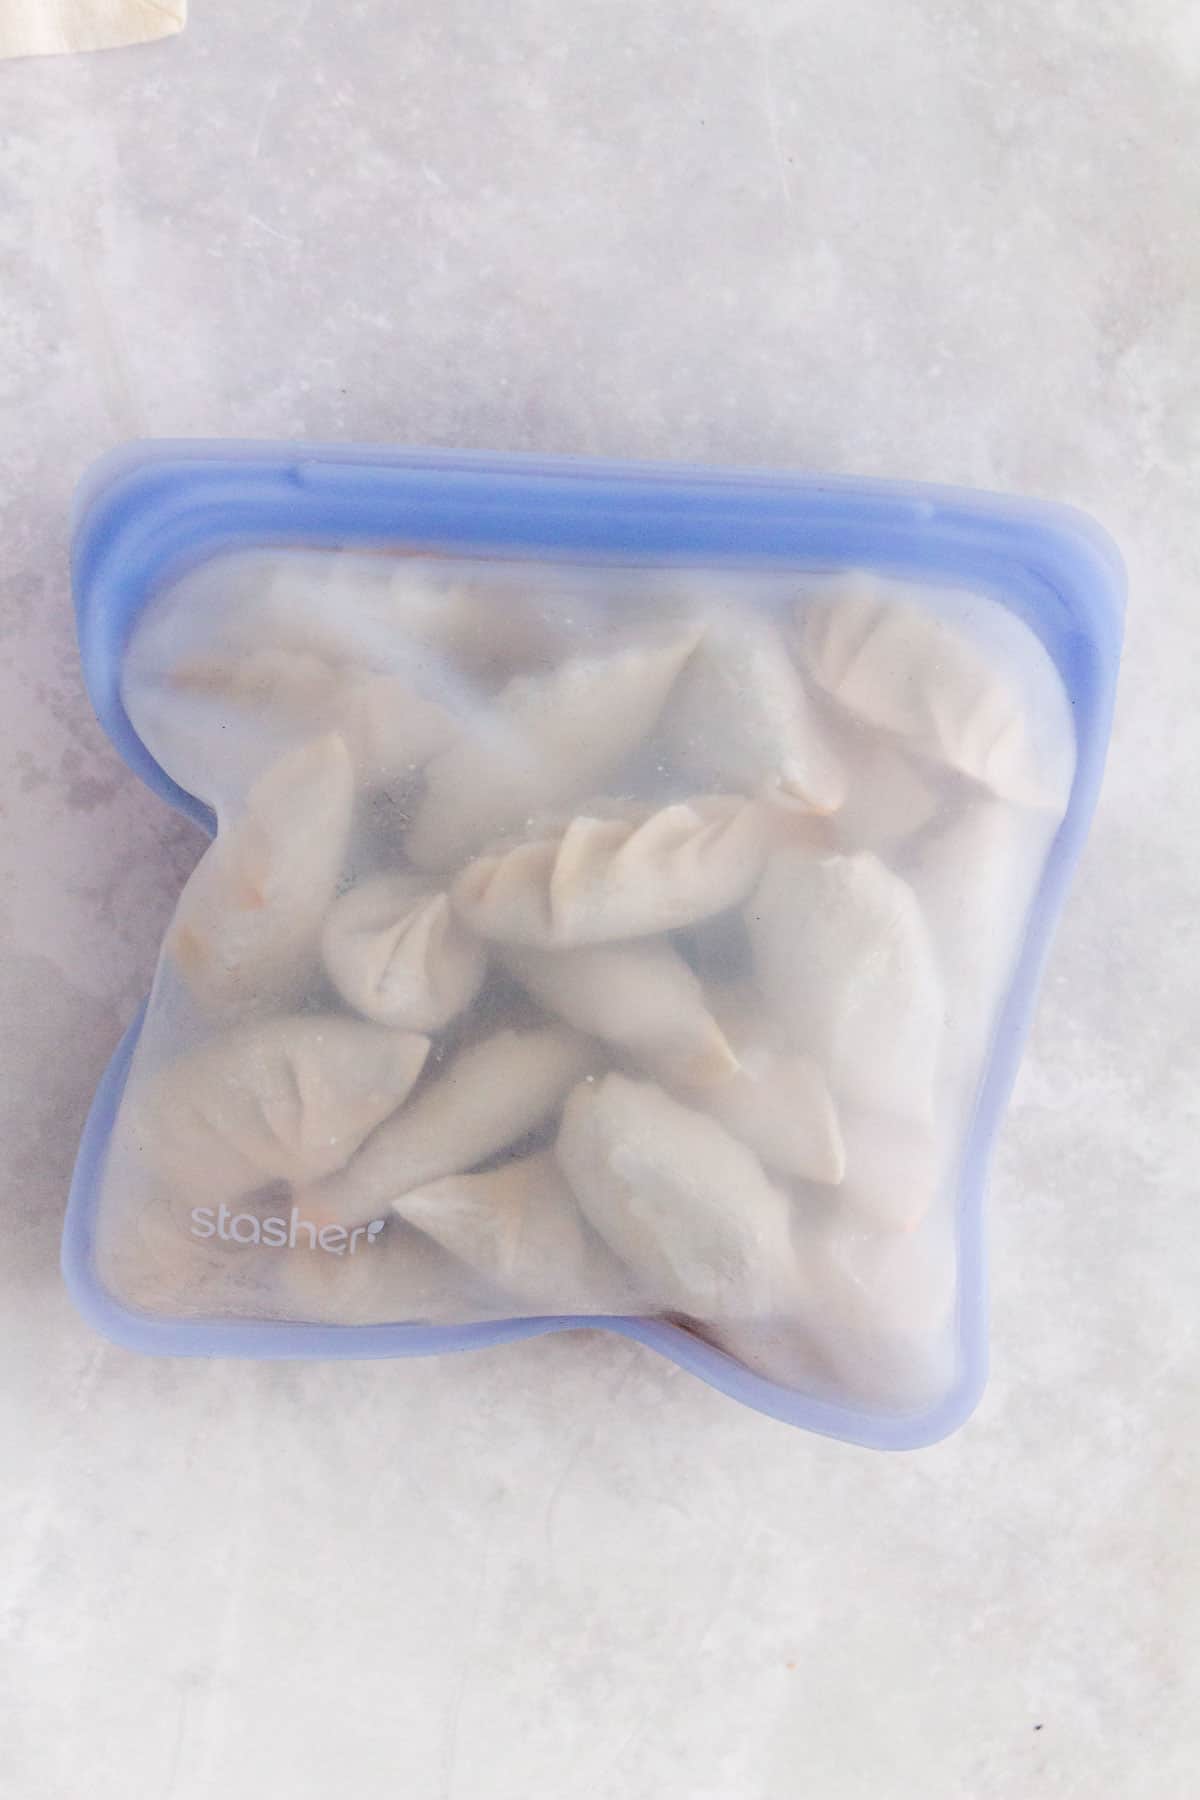 Frozen dumplings in a silicone stasher bag.